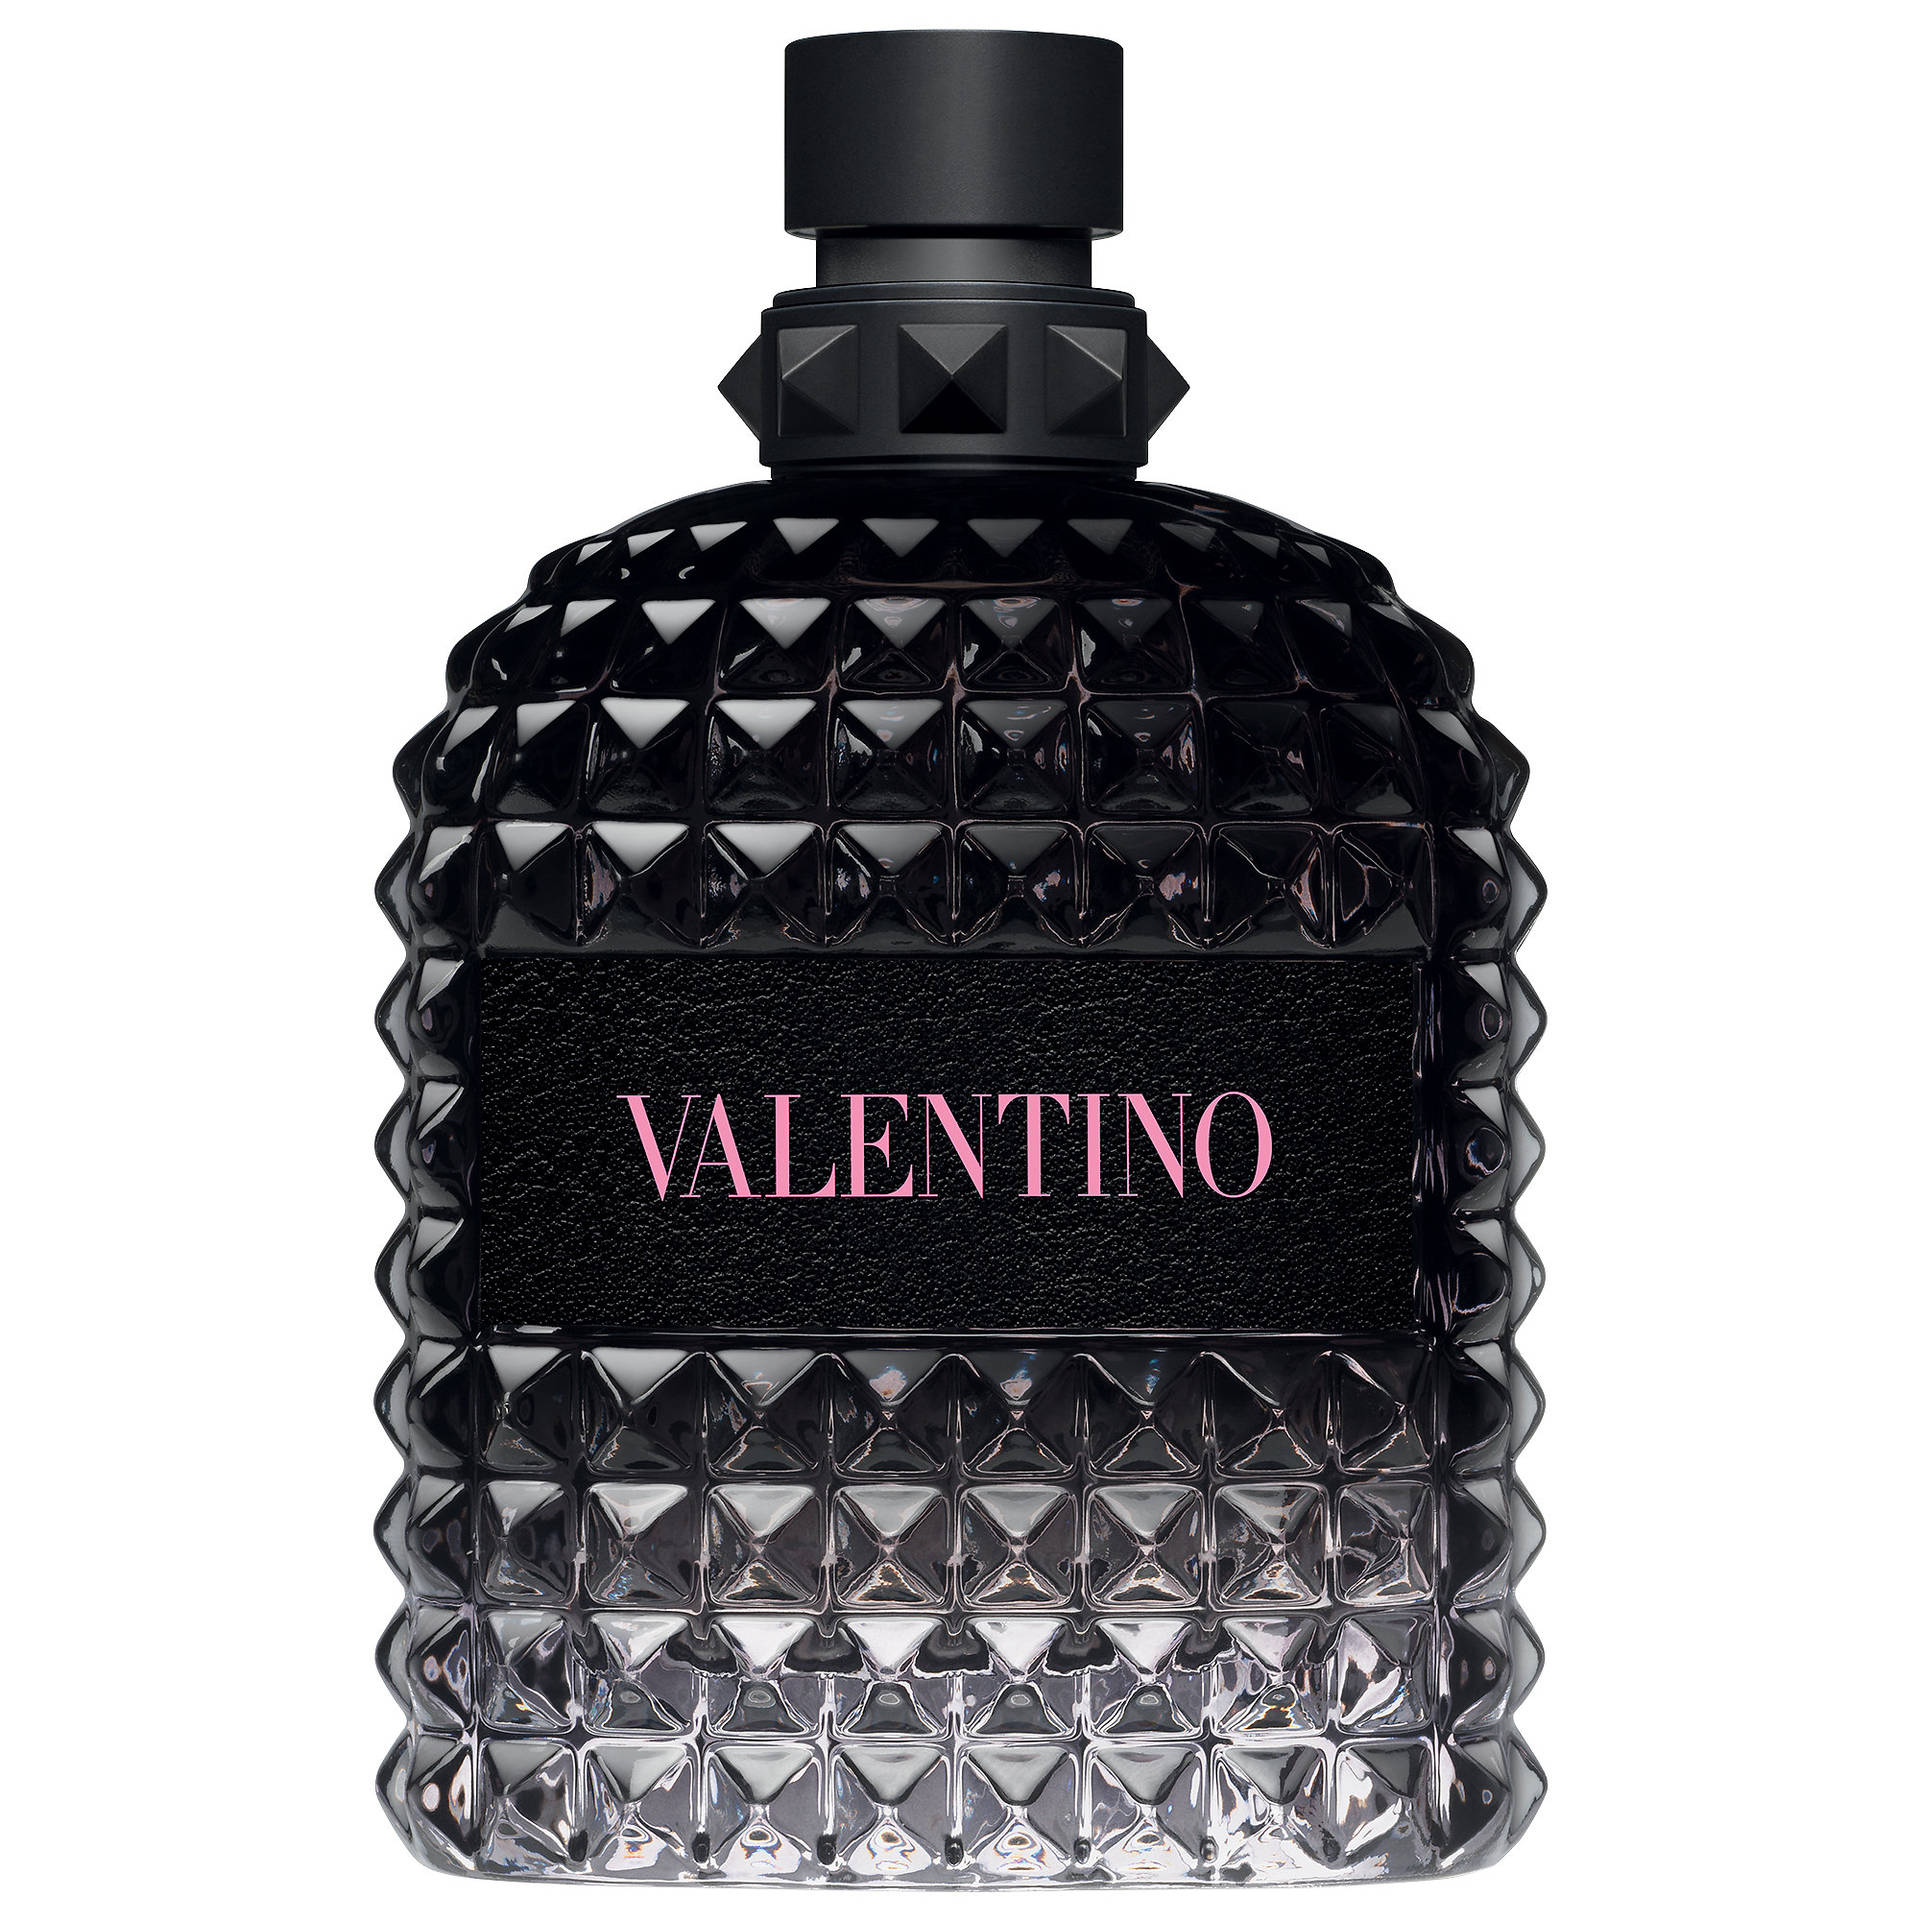 Valentino Perfume Bottle Wallpaper